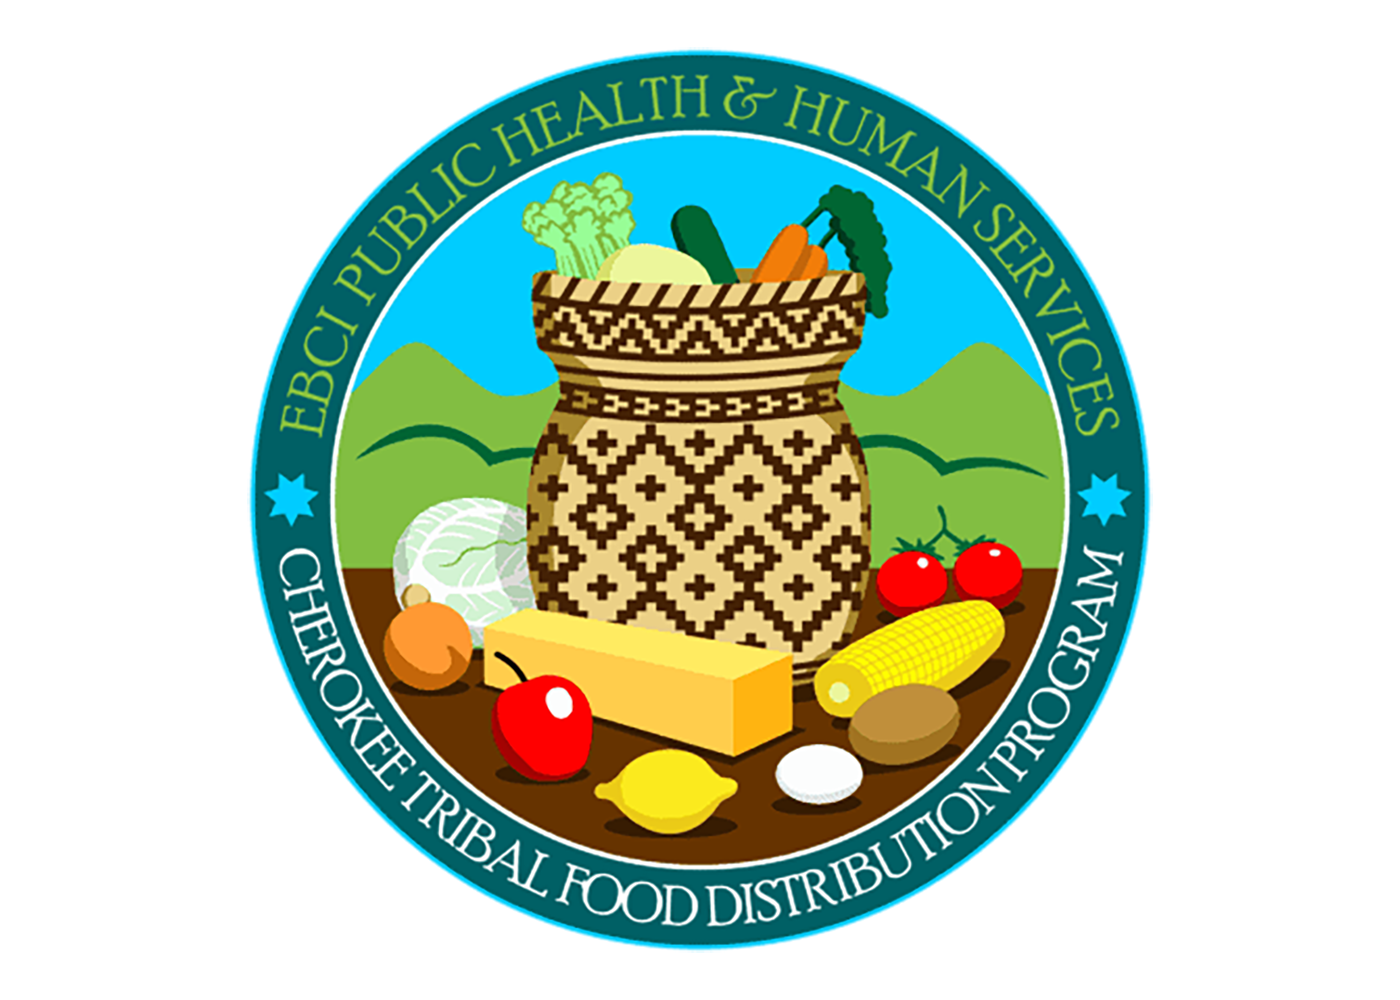 Cherokee Tribal Food Distribution emblem